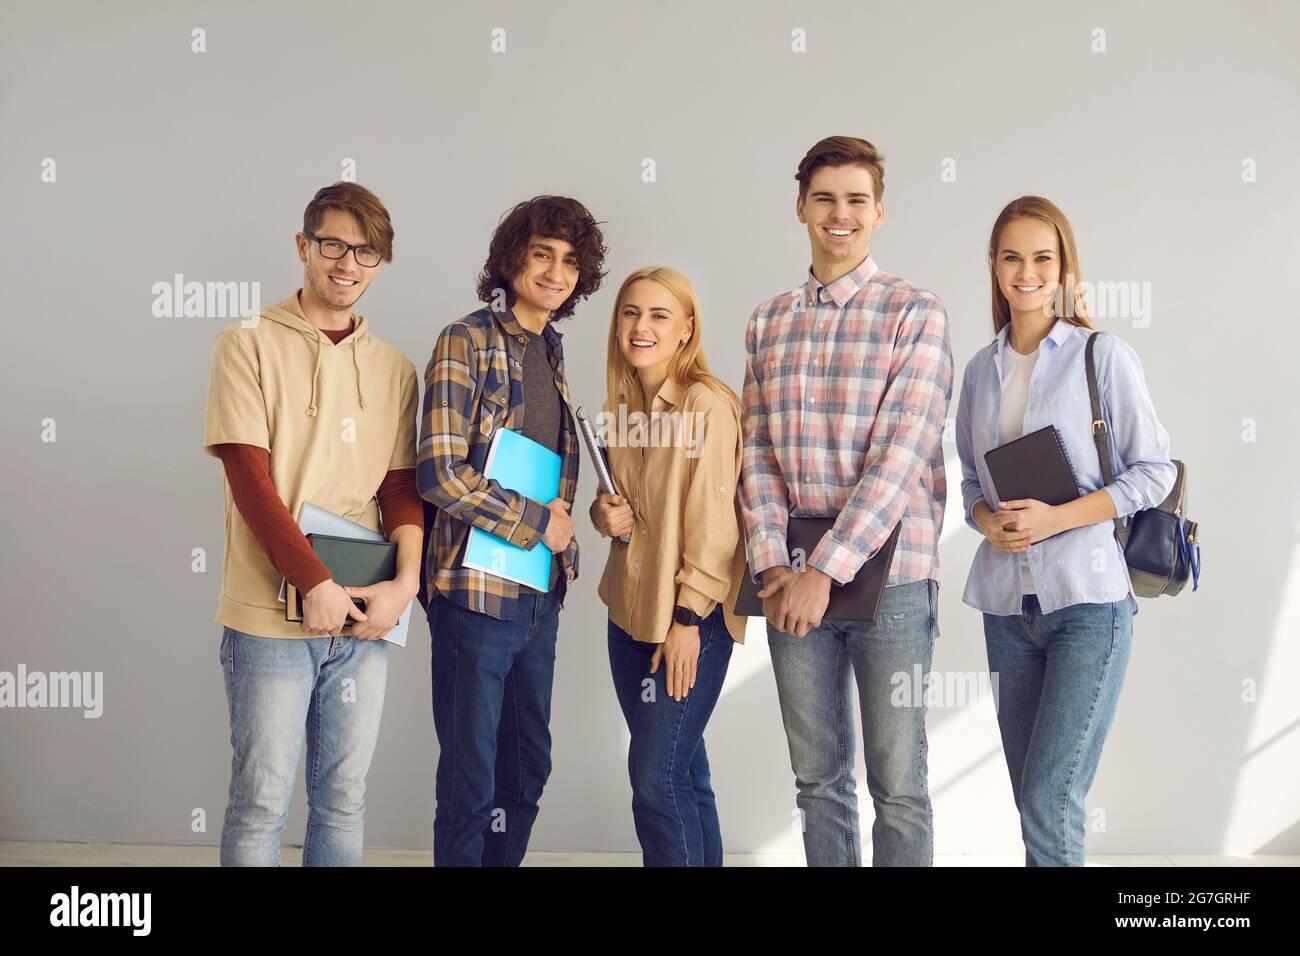 Happily smiling teenage students group portrait isolated on grey background Stock Photo